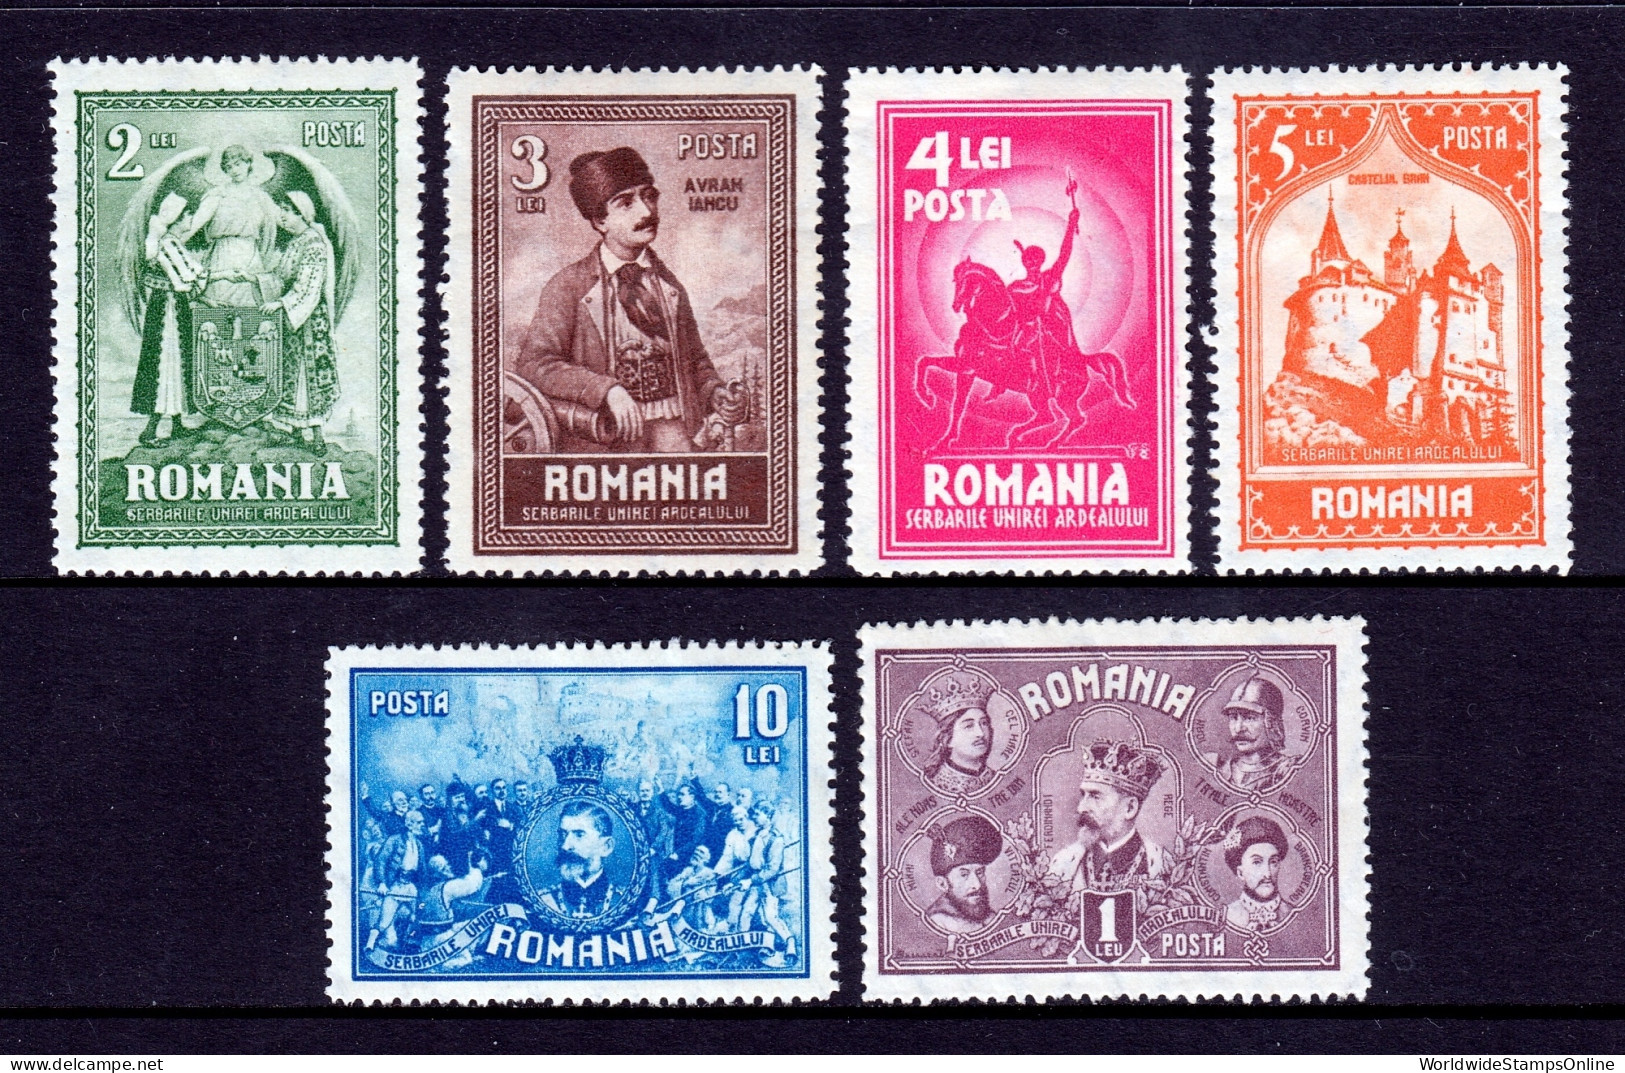 Romania - Scott #347-352 - MH - Lt. Crease #352, A Few Hinge Bumps - SCV $21 - Unused Stamps